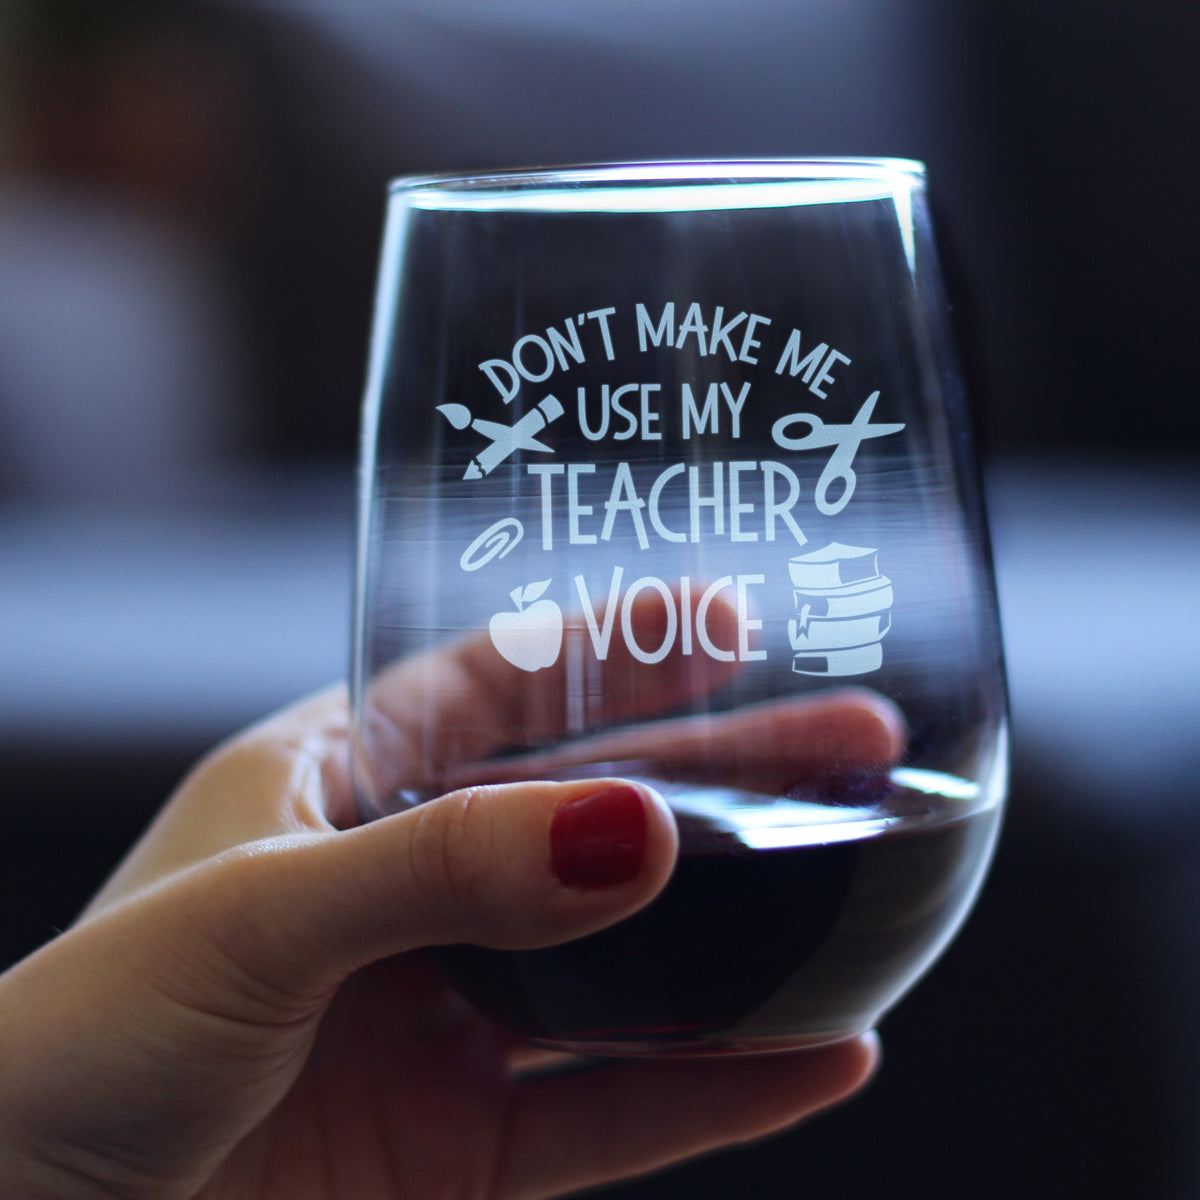 Teacher Voice – Stemless Wine Glass - Cute Funny Teacher Gifts for Women - Fun Unique Teacher Decor - Large